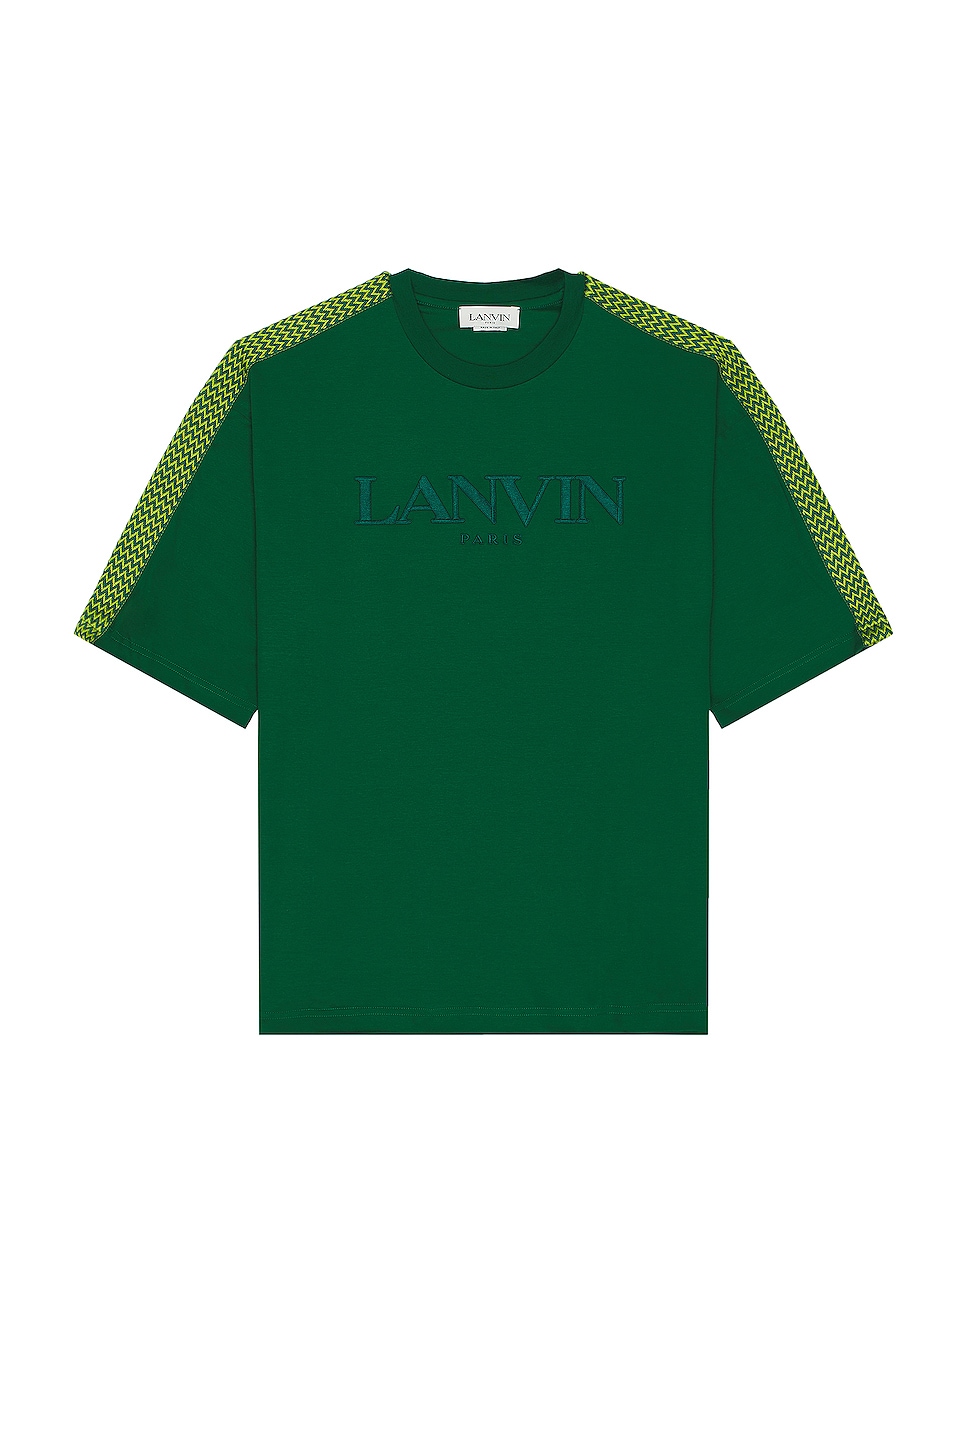 Image 1 of Lanvin Side Curb Oversized T-shirt in Bottle